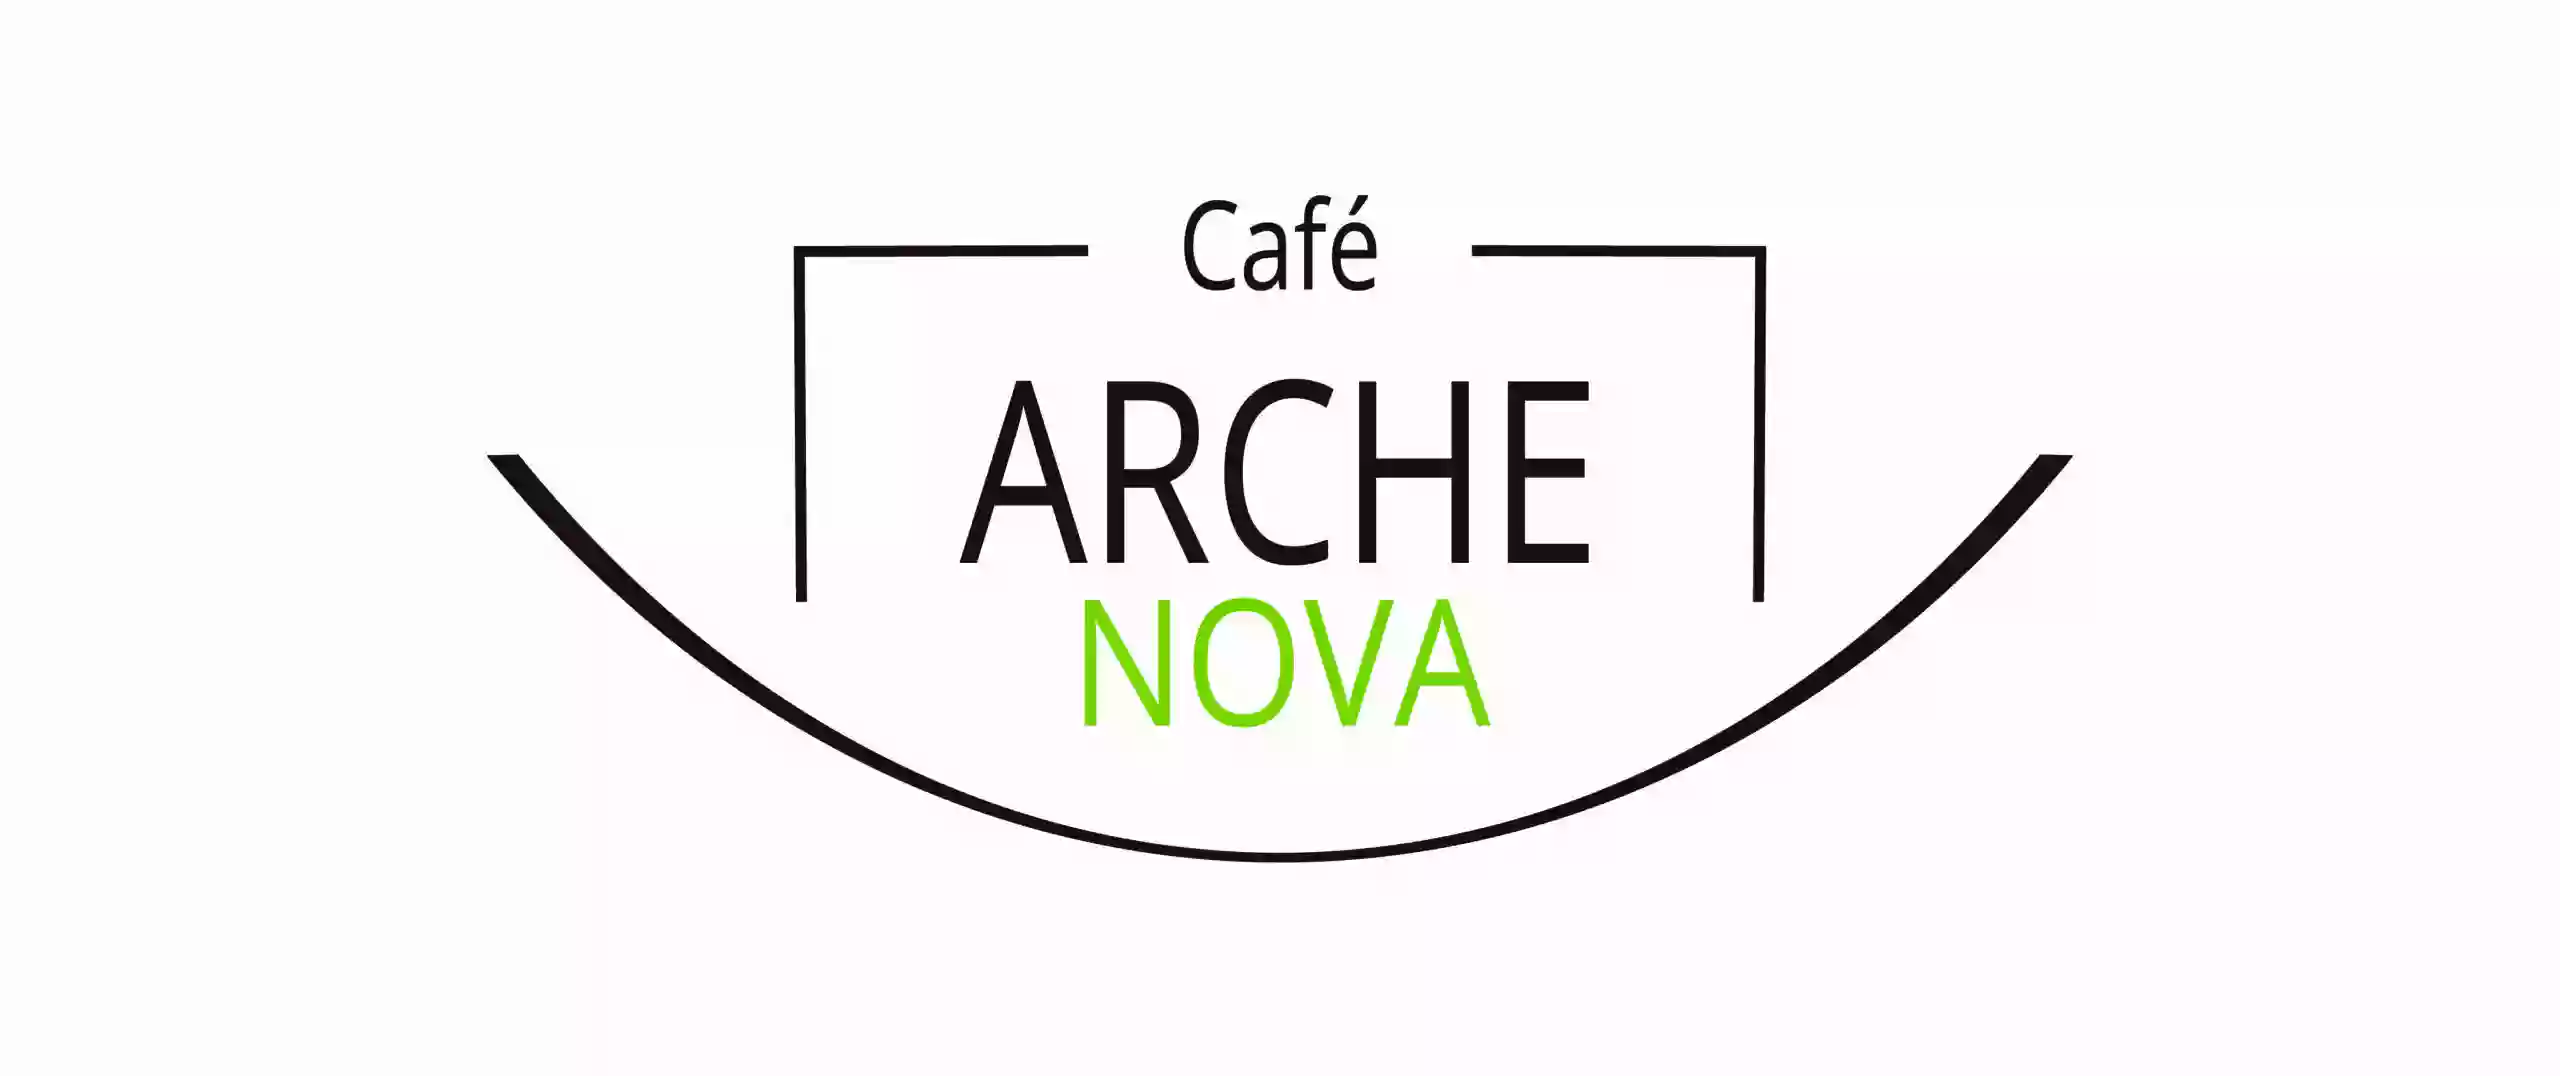 Café ARCHE NOVA